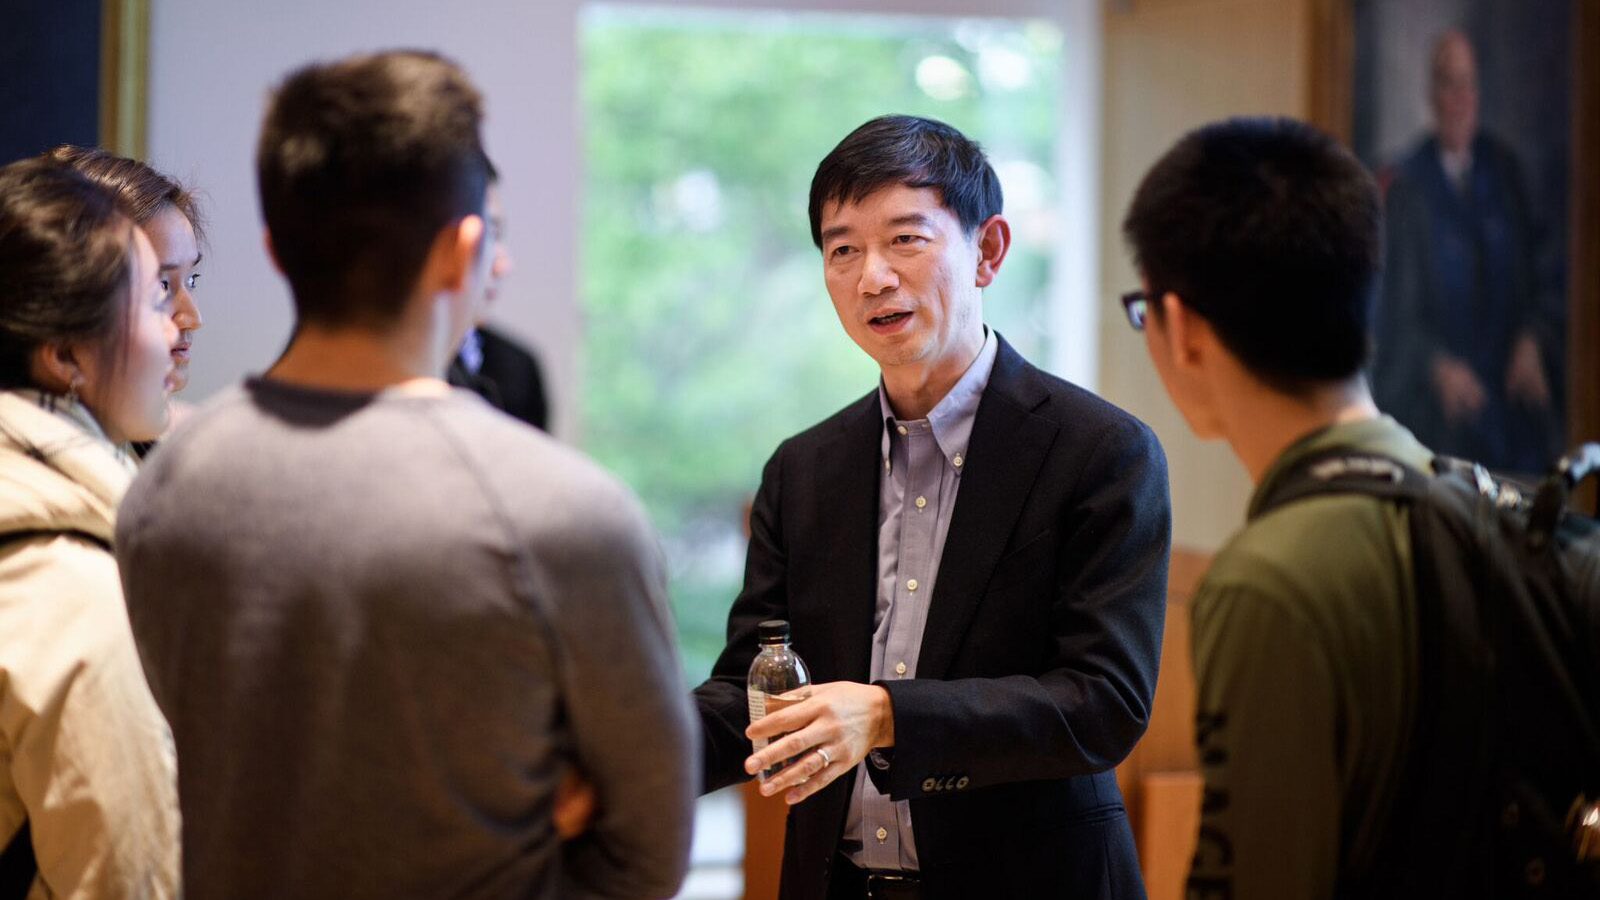 Entrepreneur James Mi speaks with students